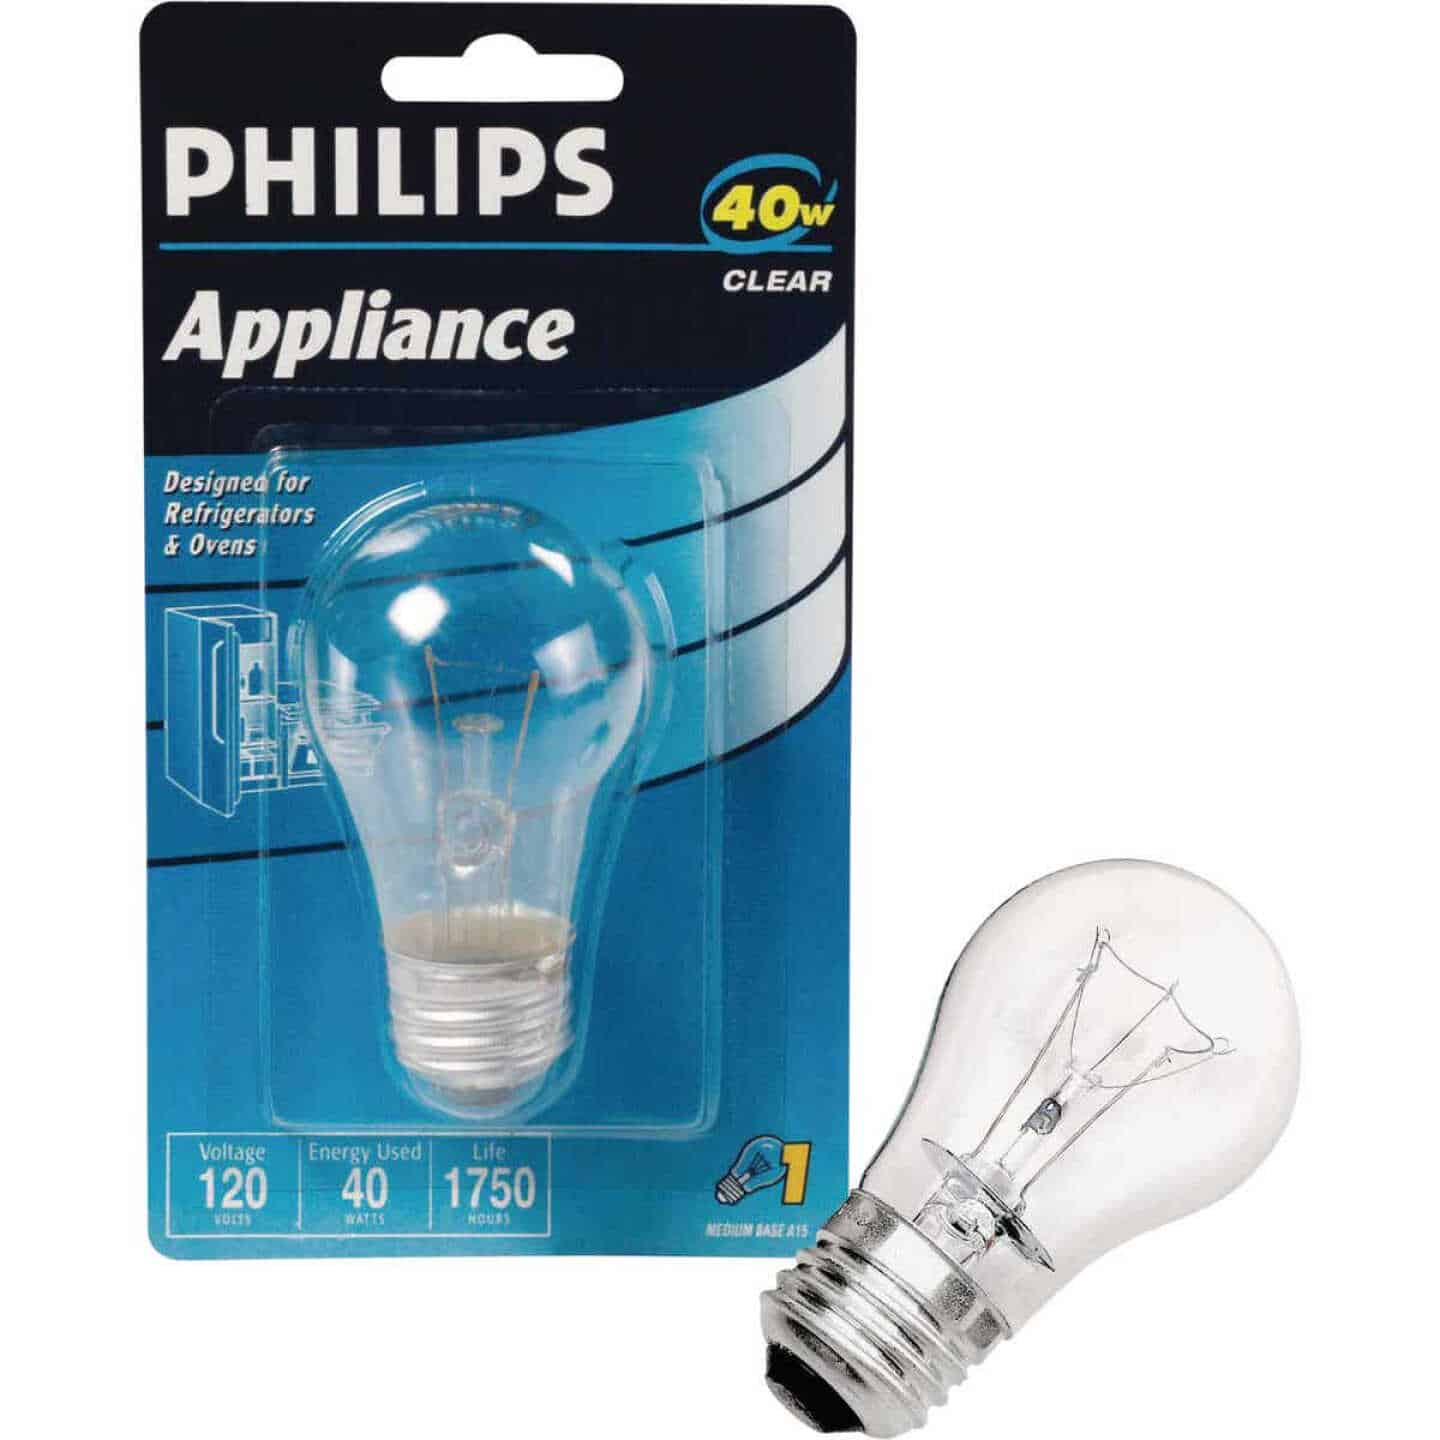 Phillips A15 Incandescent Appliance Light Bulb